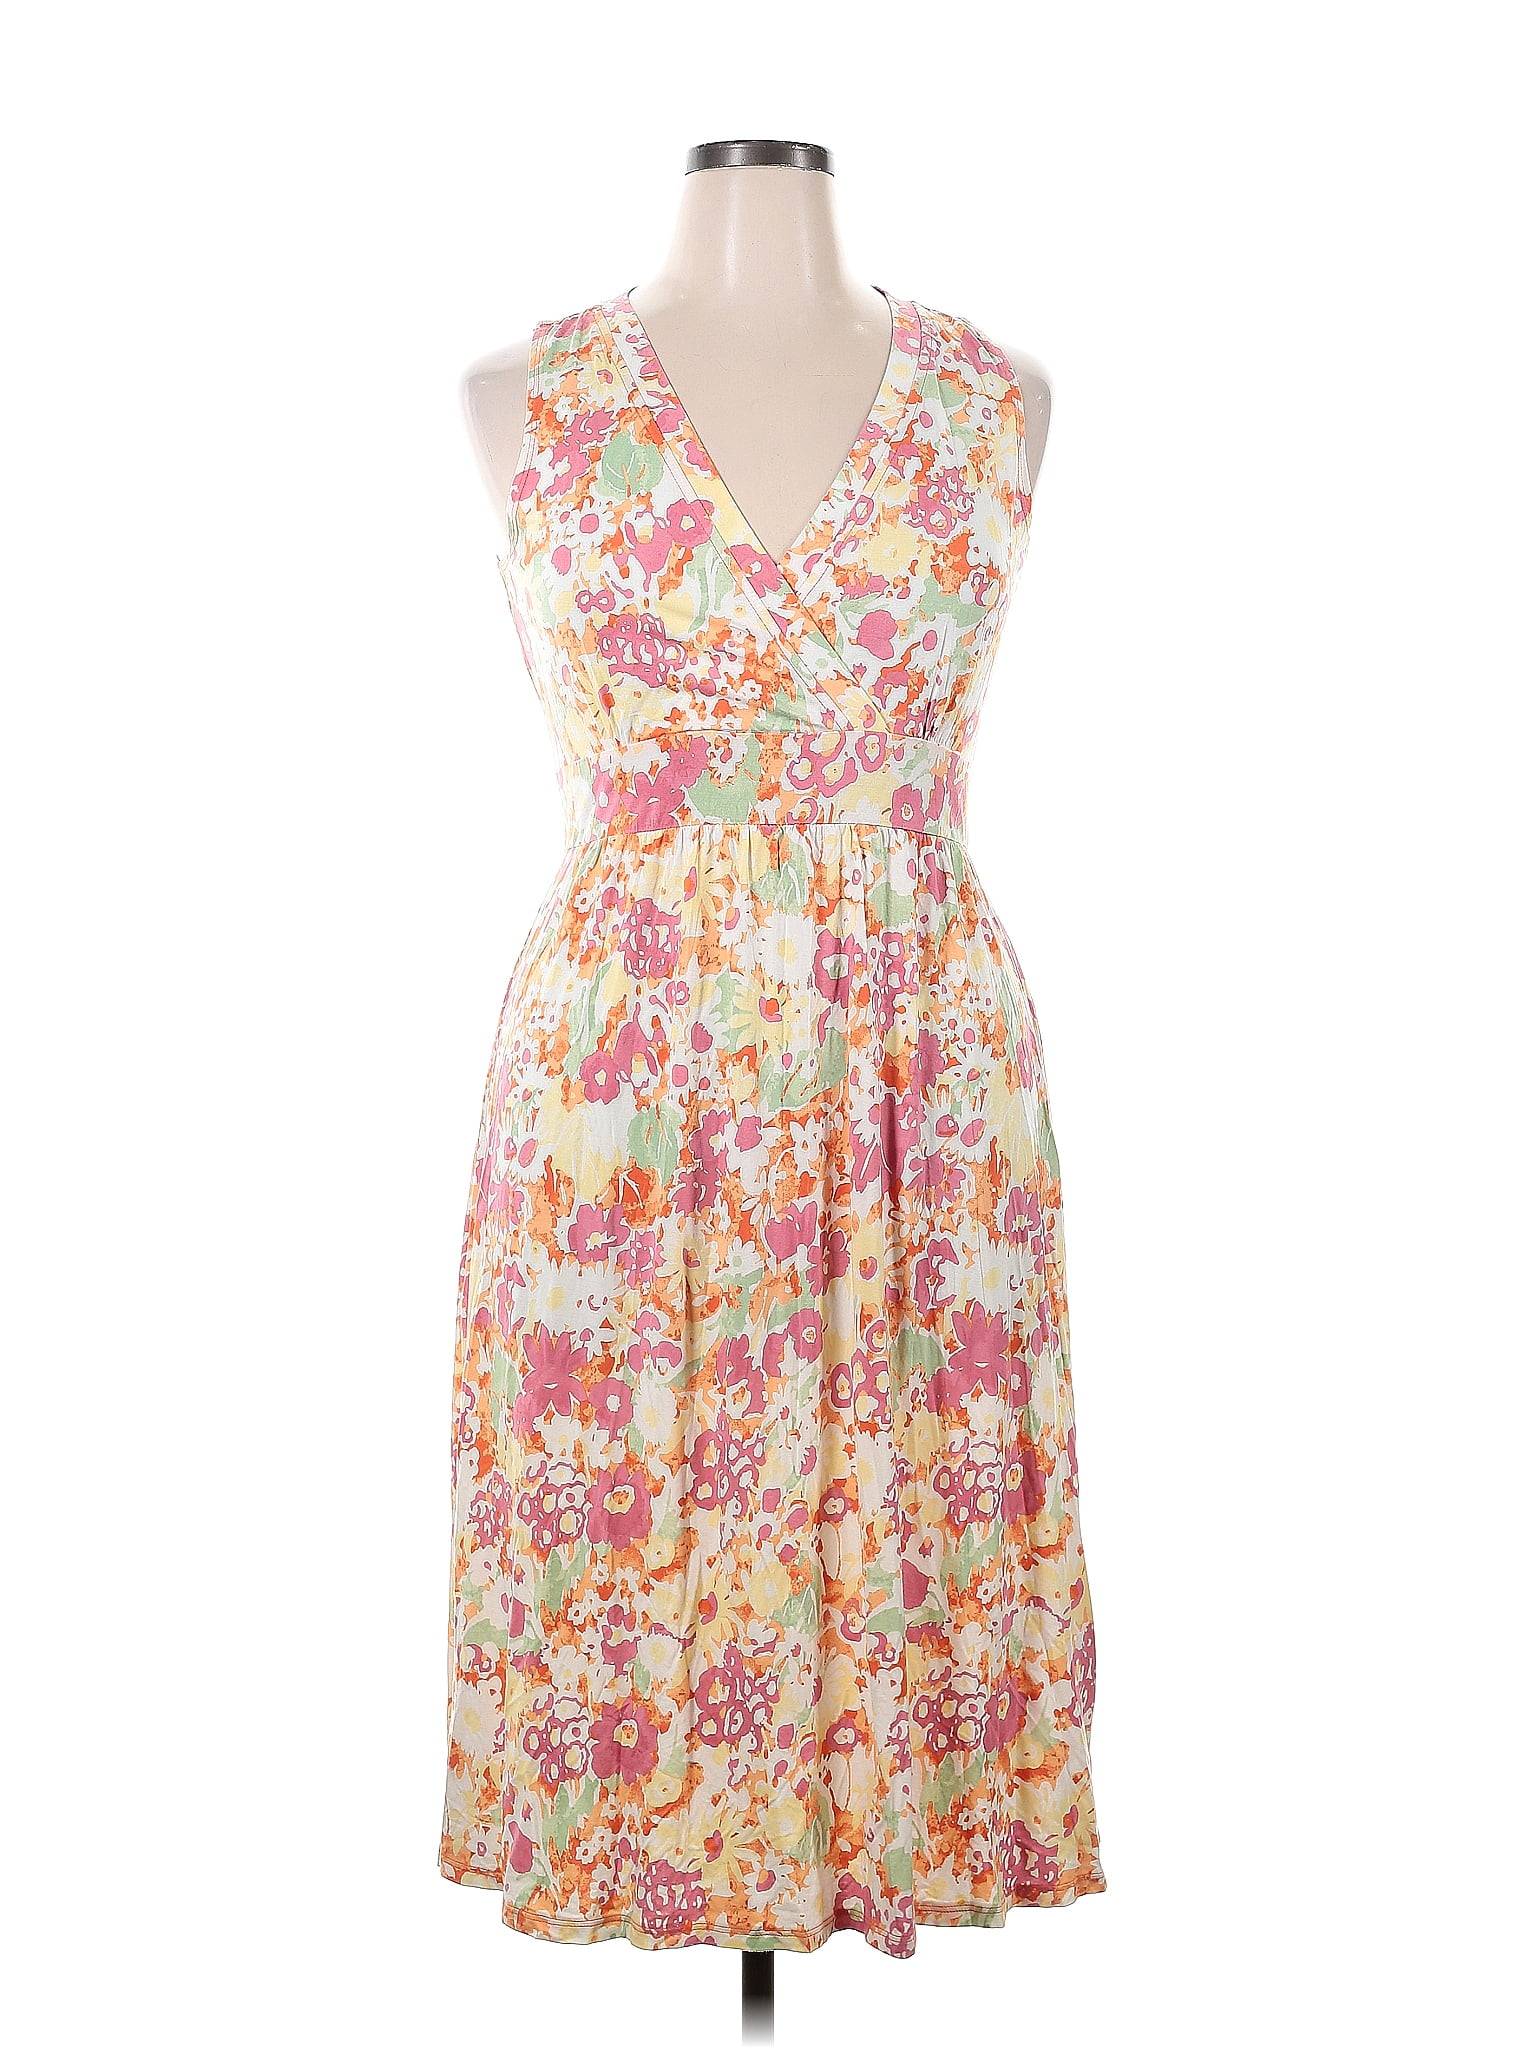 L.L.Bean Floral Multi Color Pink Casual Dress Size L - 41% off | thredUP